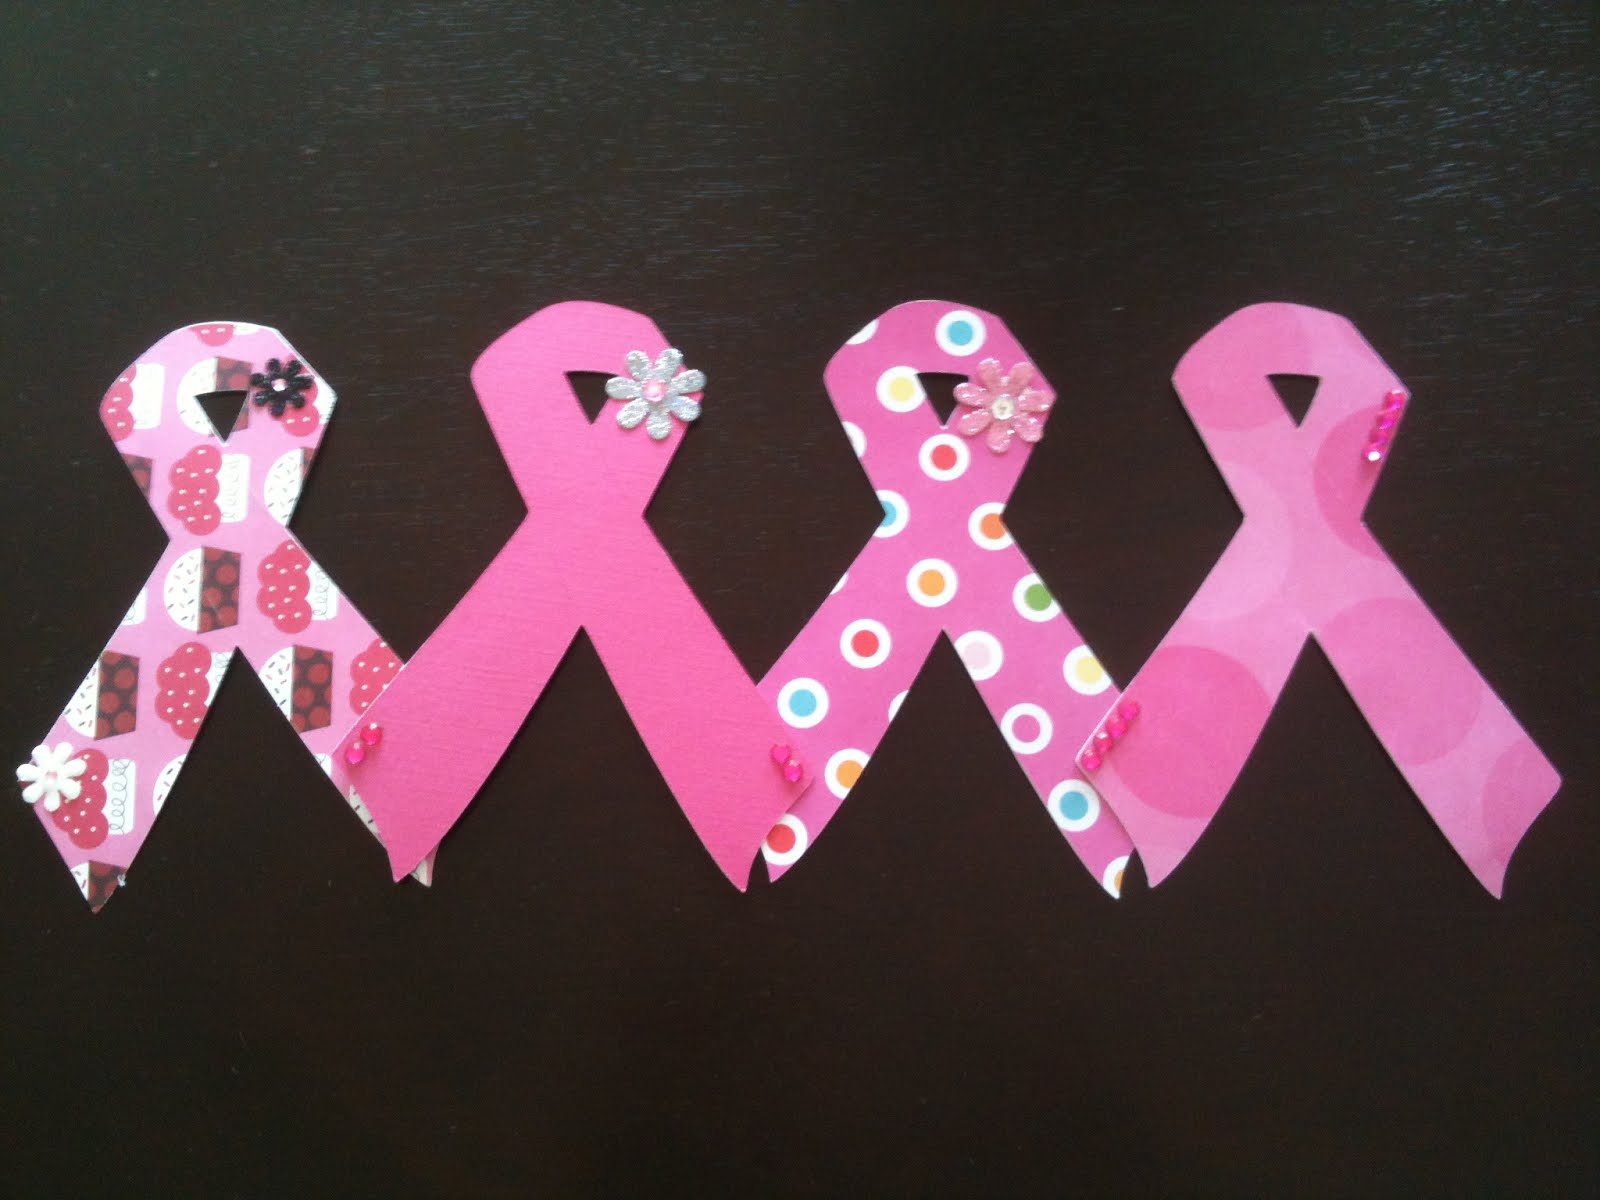 Premium Vector  Breast cancer awareness pink ribbons seamless pattern for  wallpaper scrapbooking textile prints